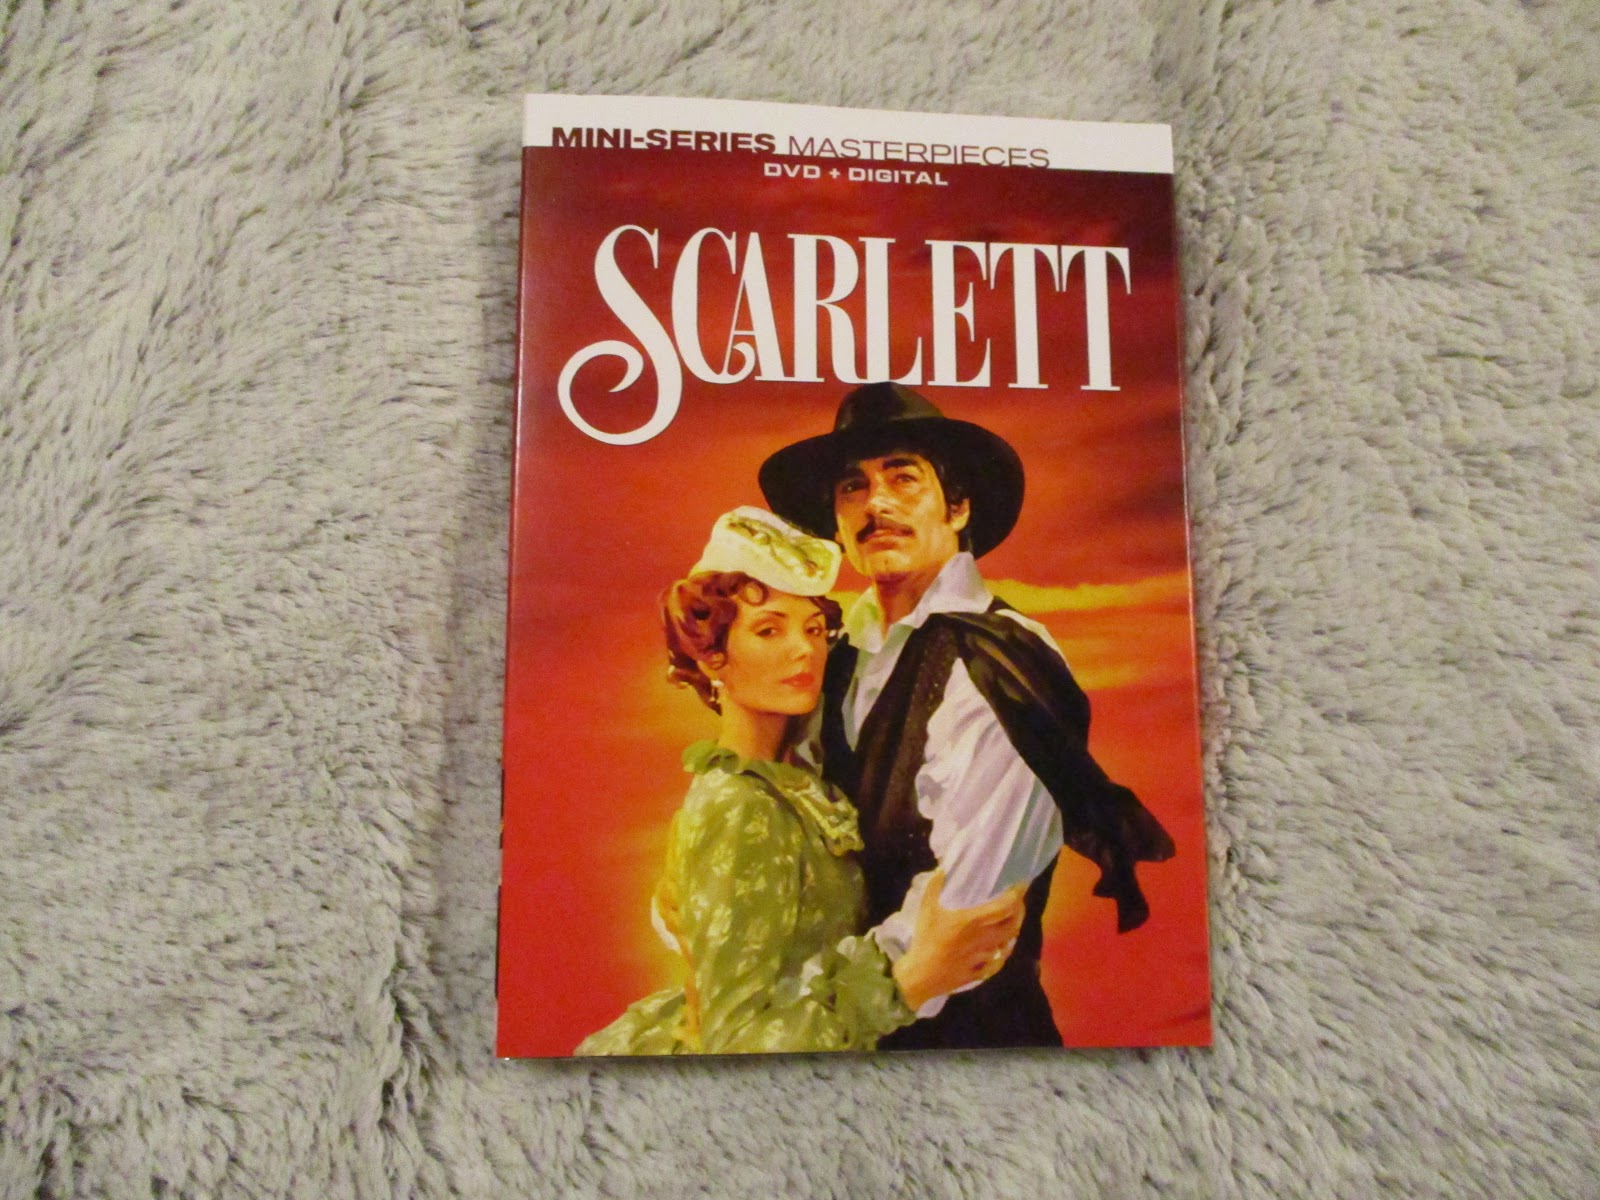 Scarlett DVD Gone With the Wind sequel Timothy Dalton Joanne Whalley Sean  Bean